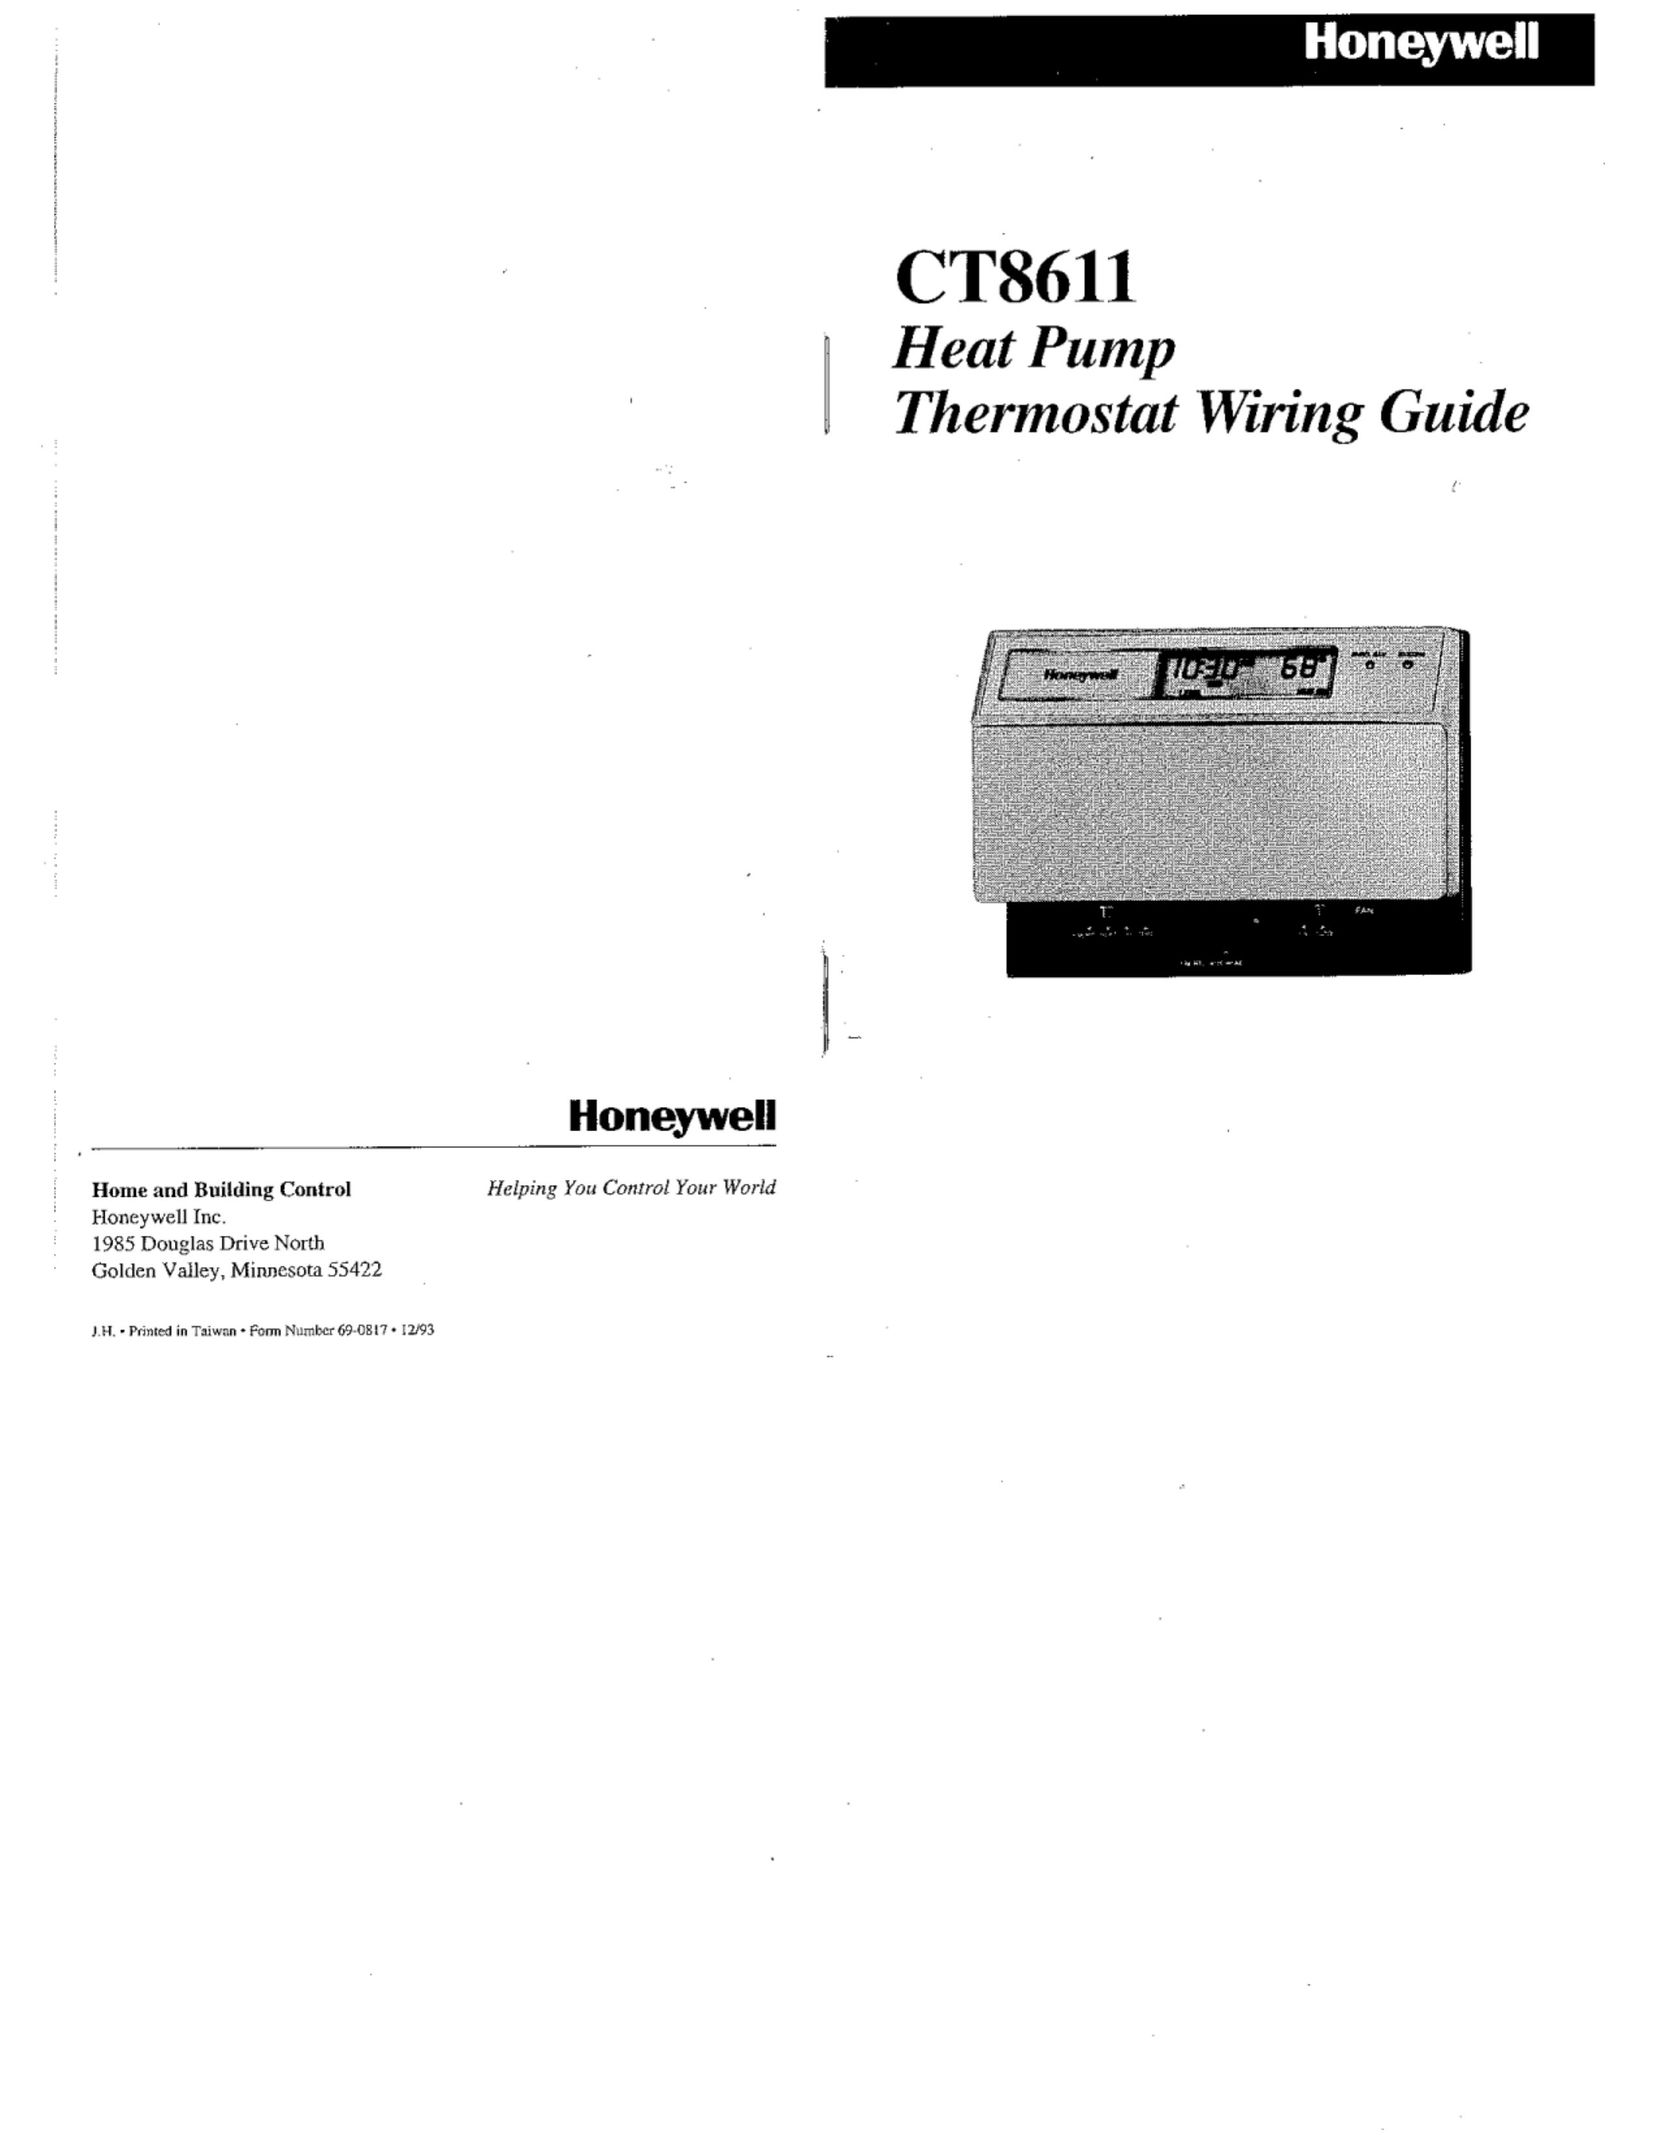 Honeywell CT8611 Heat Pump User Manual